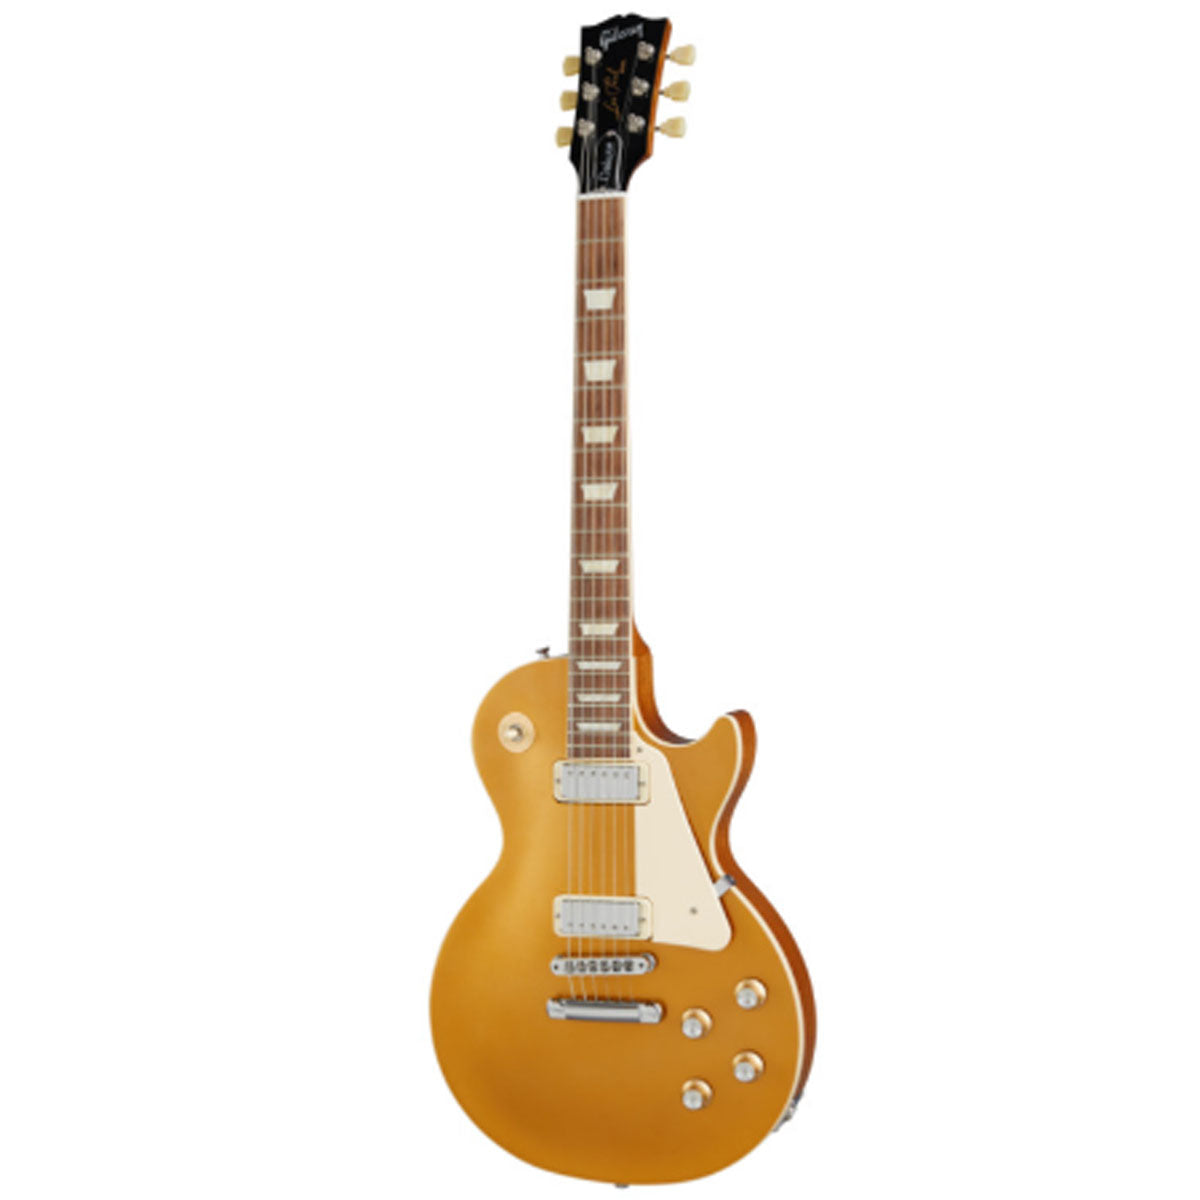 Gibson Les Paul Deluxe 70s LP Electric Guitar Goldtop - LPDX00GTCH1